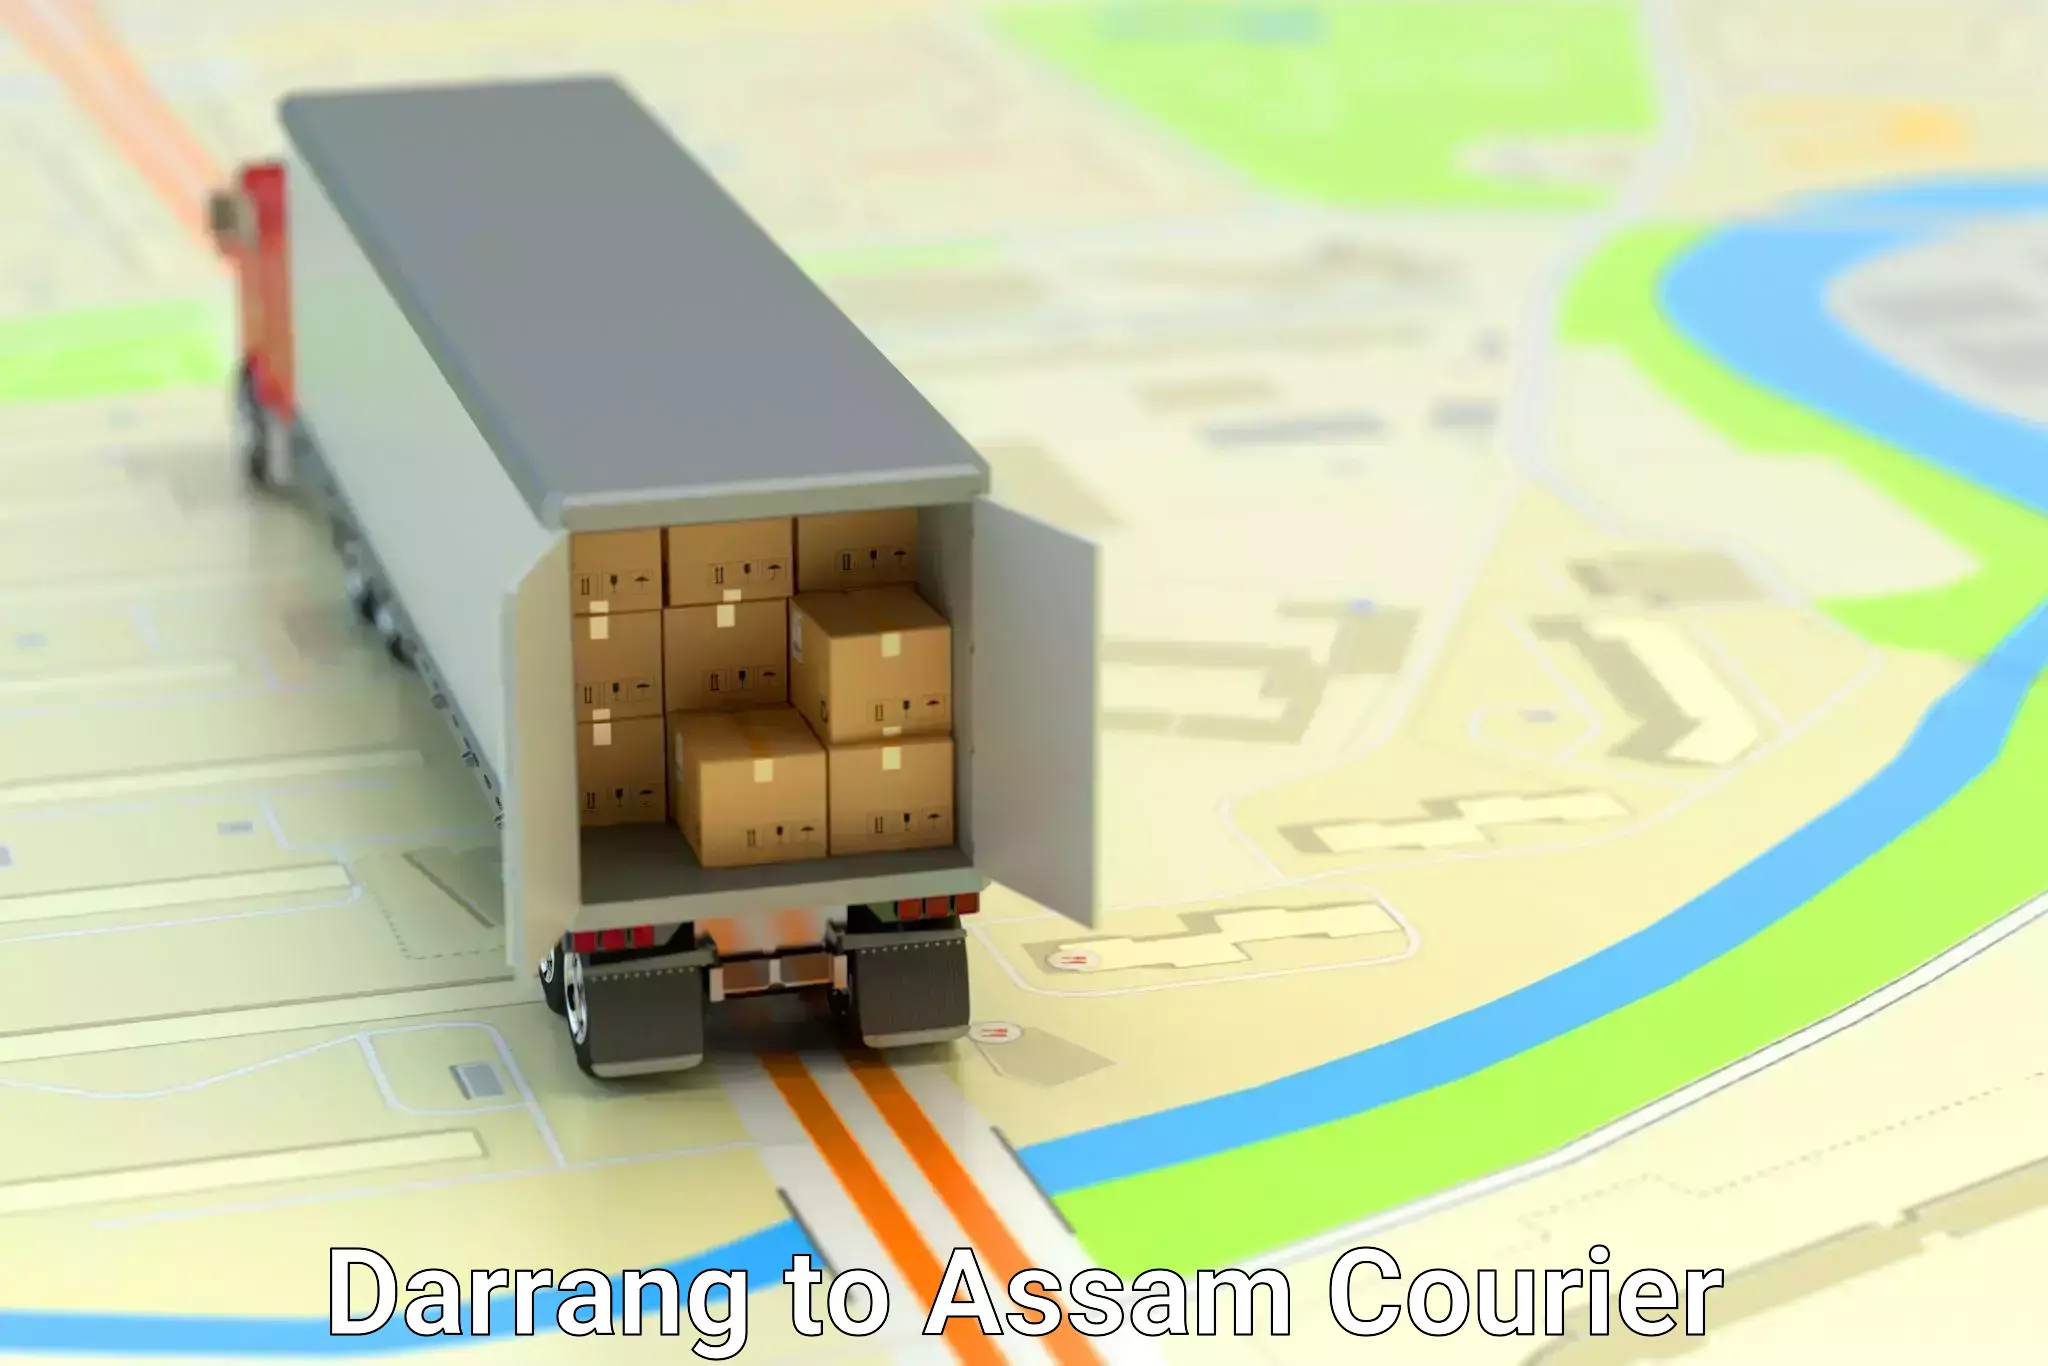 Global logistics network Darrang to Barpeta